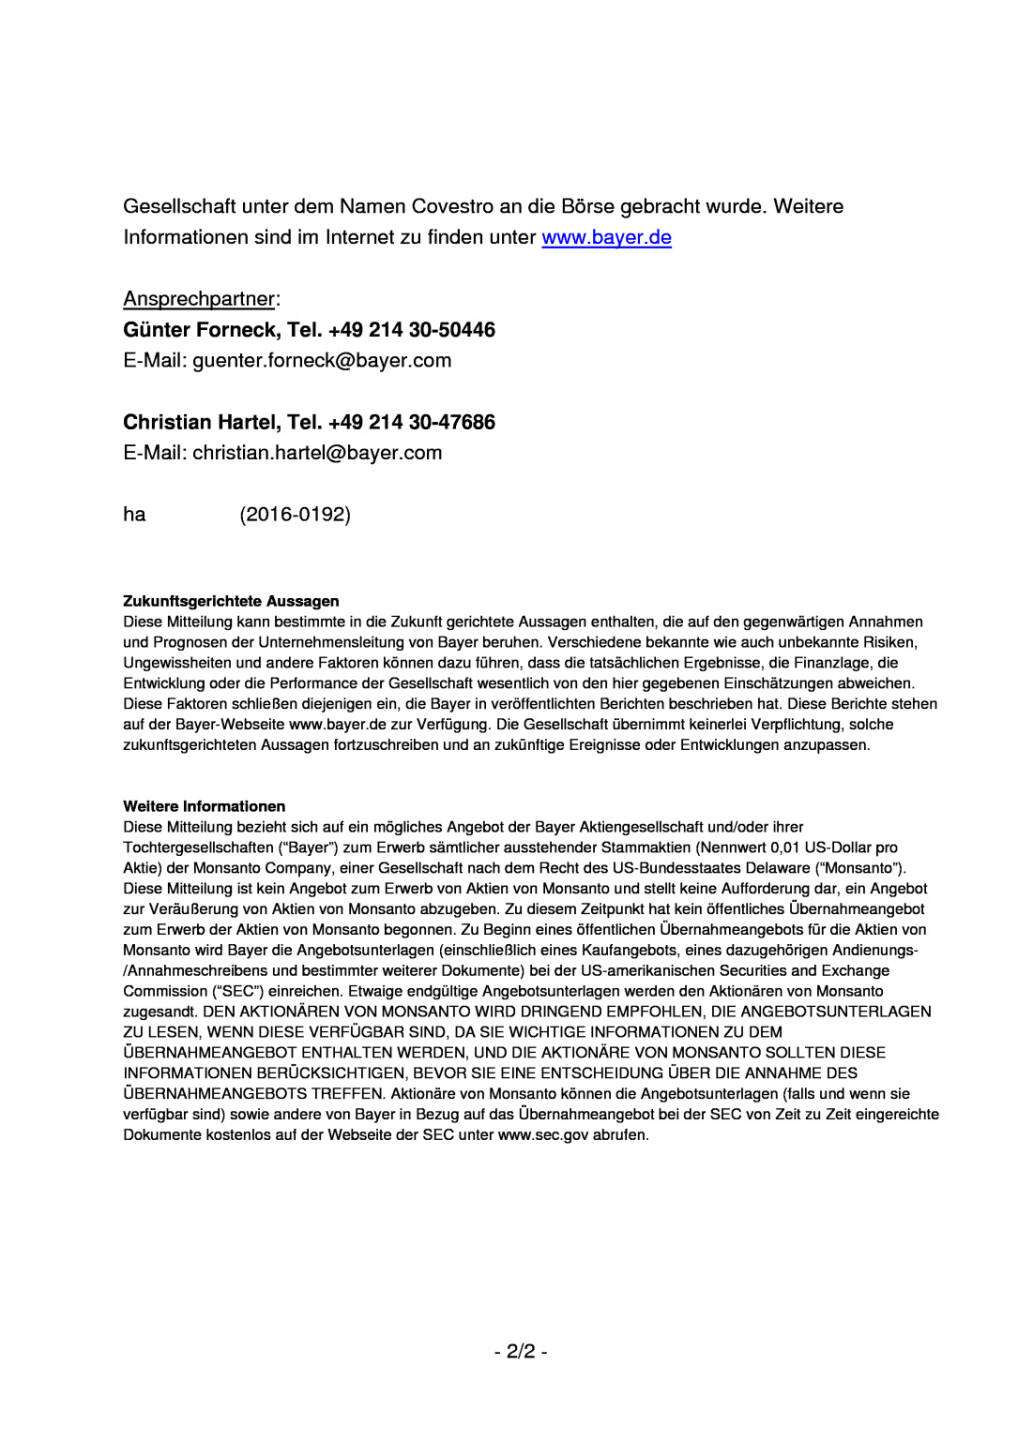 Bayer: Fortgeschrittene Verhandlungen über Monsanto-Akquisition, Seite 2/2, komplettes Dokument unter http://boerse-social.com/static/uploads/file_1731_bayer_fortgeschrittene_verhandlungen_uber_monsanto-akquisition.pdf